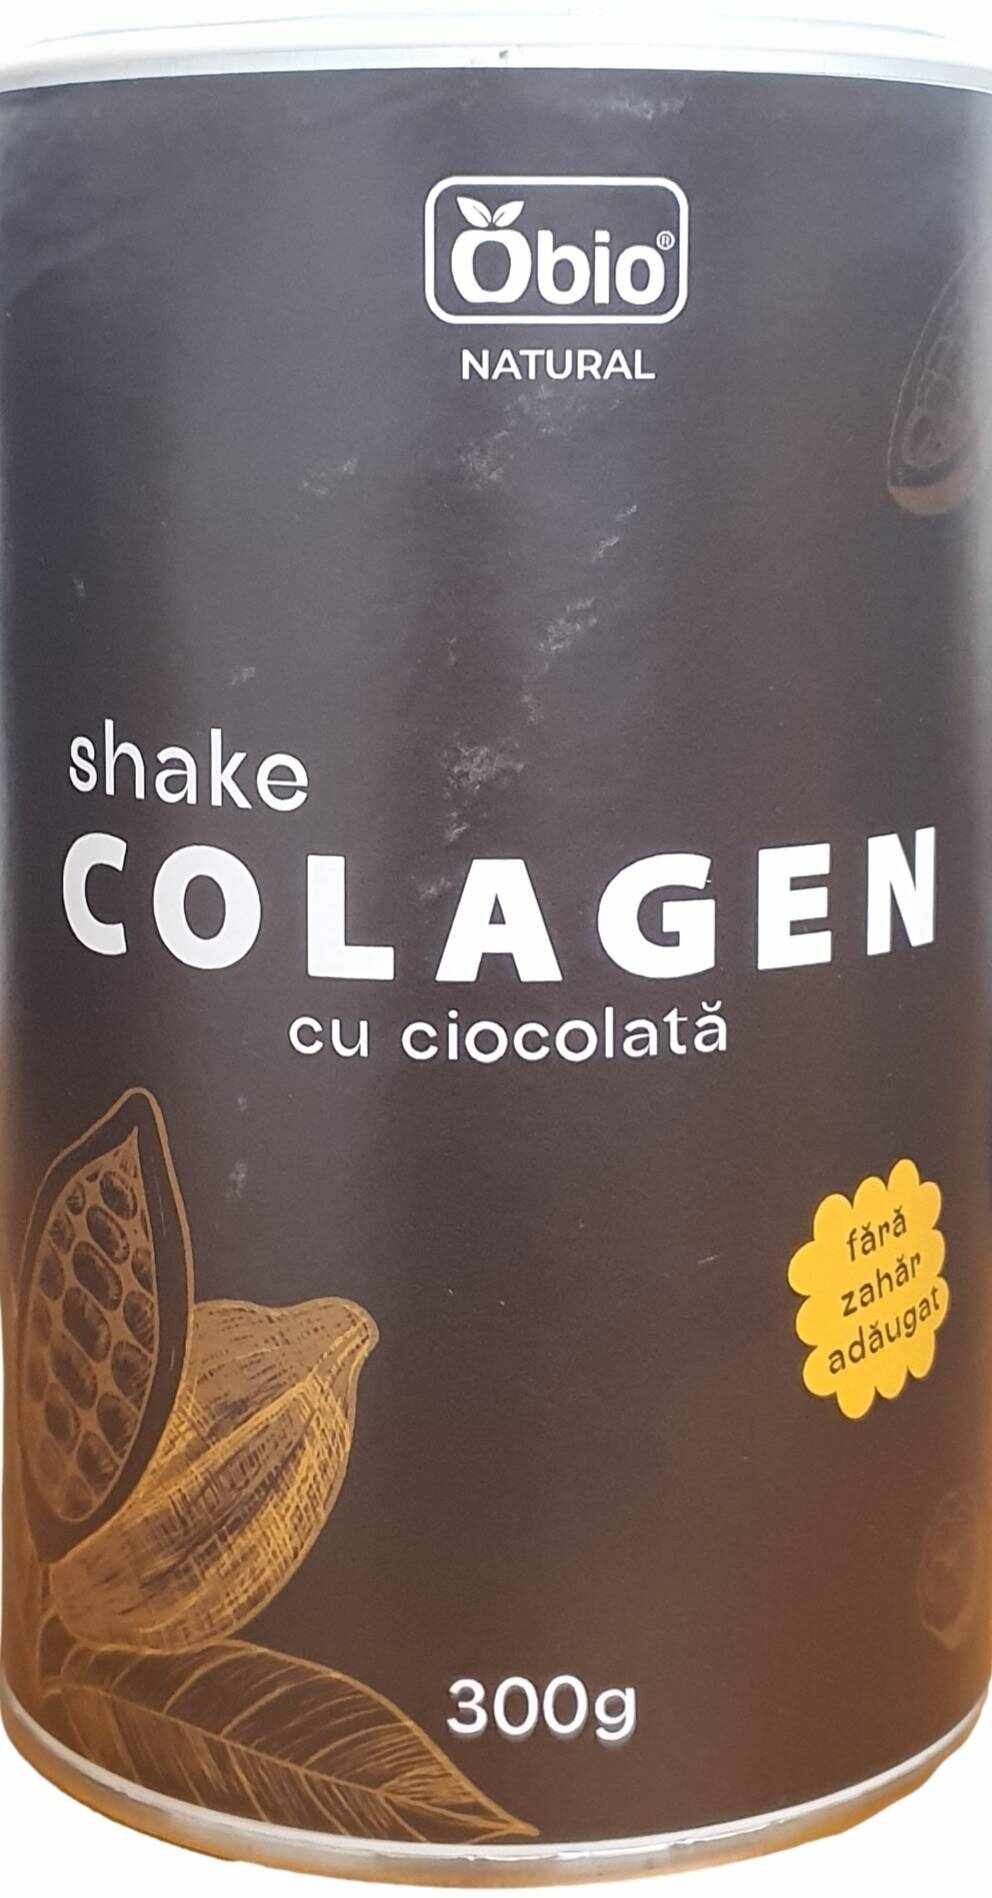 Colagen shake cu ciocolata, fara zahar, 300g, Obio